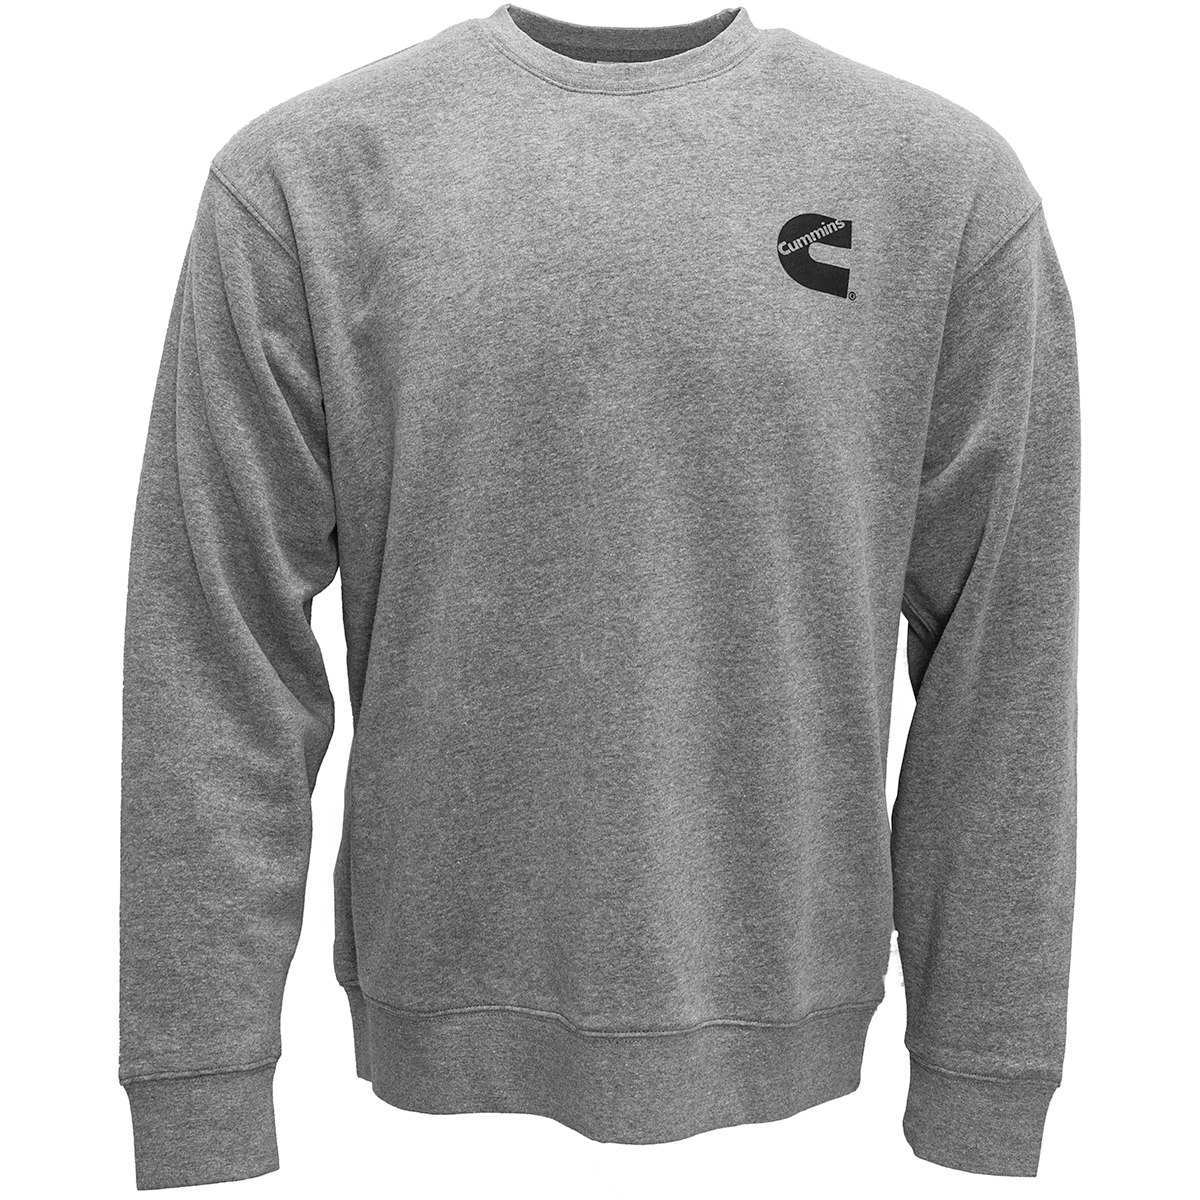 Cummins Unisex Fleece Crewneck Sweatshirt Gray in Comfy Cotton Blend Large CMN5024